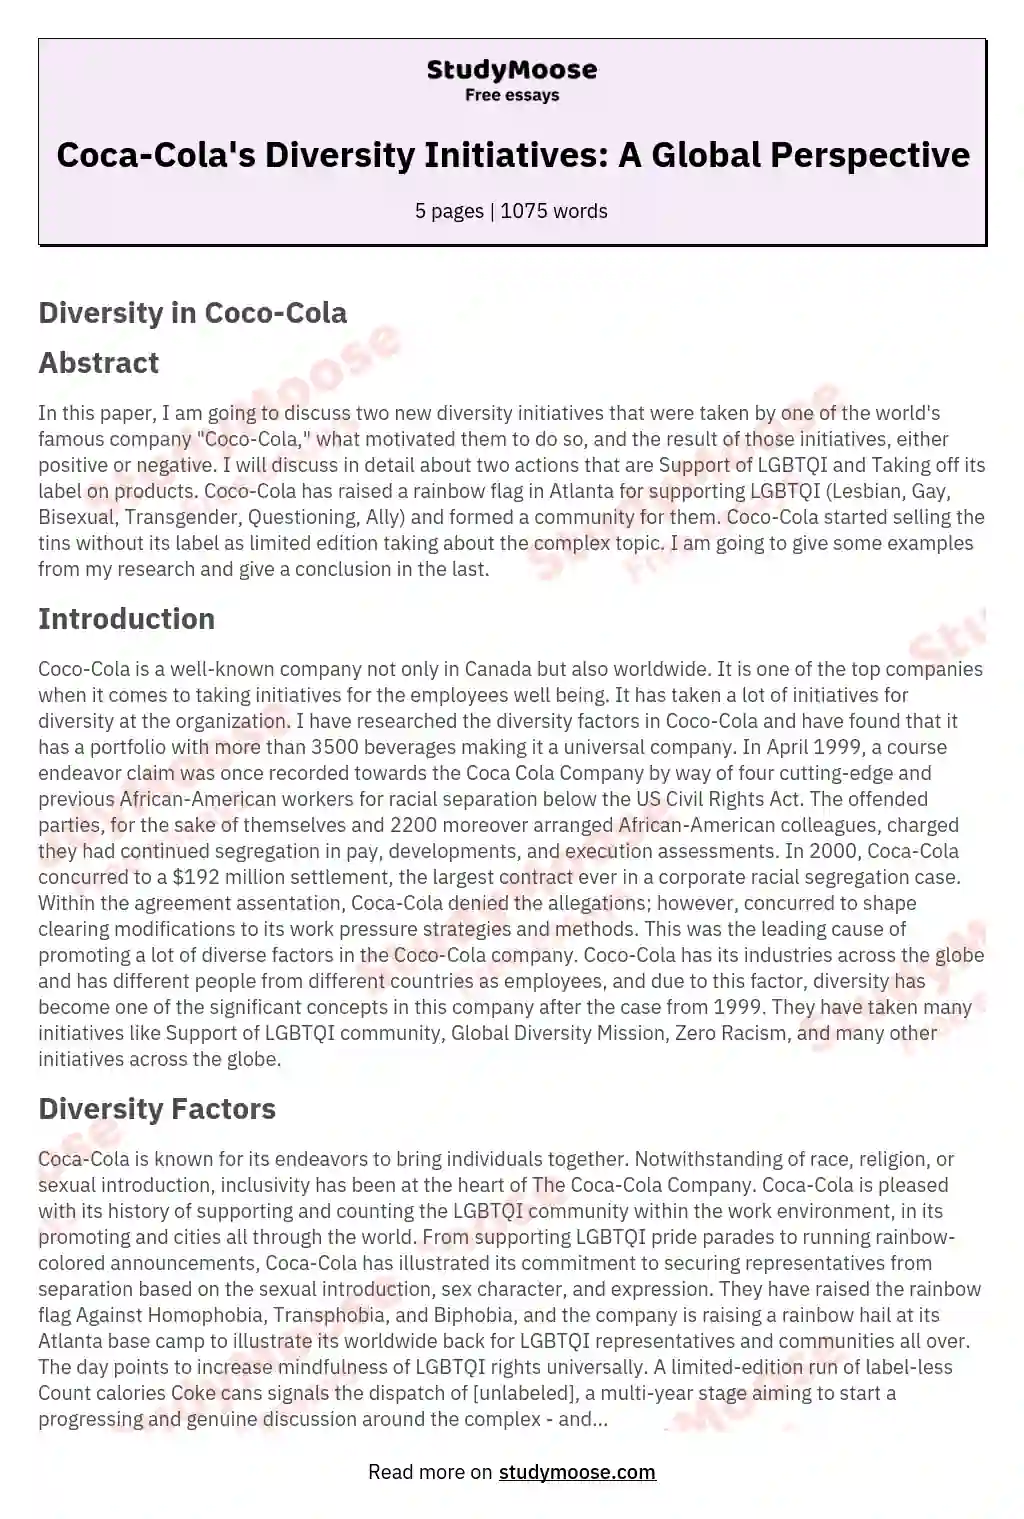 Diversity in Coco-Cola